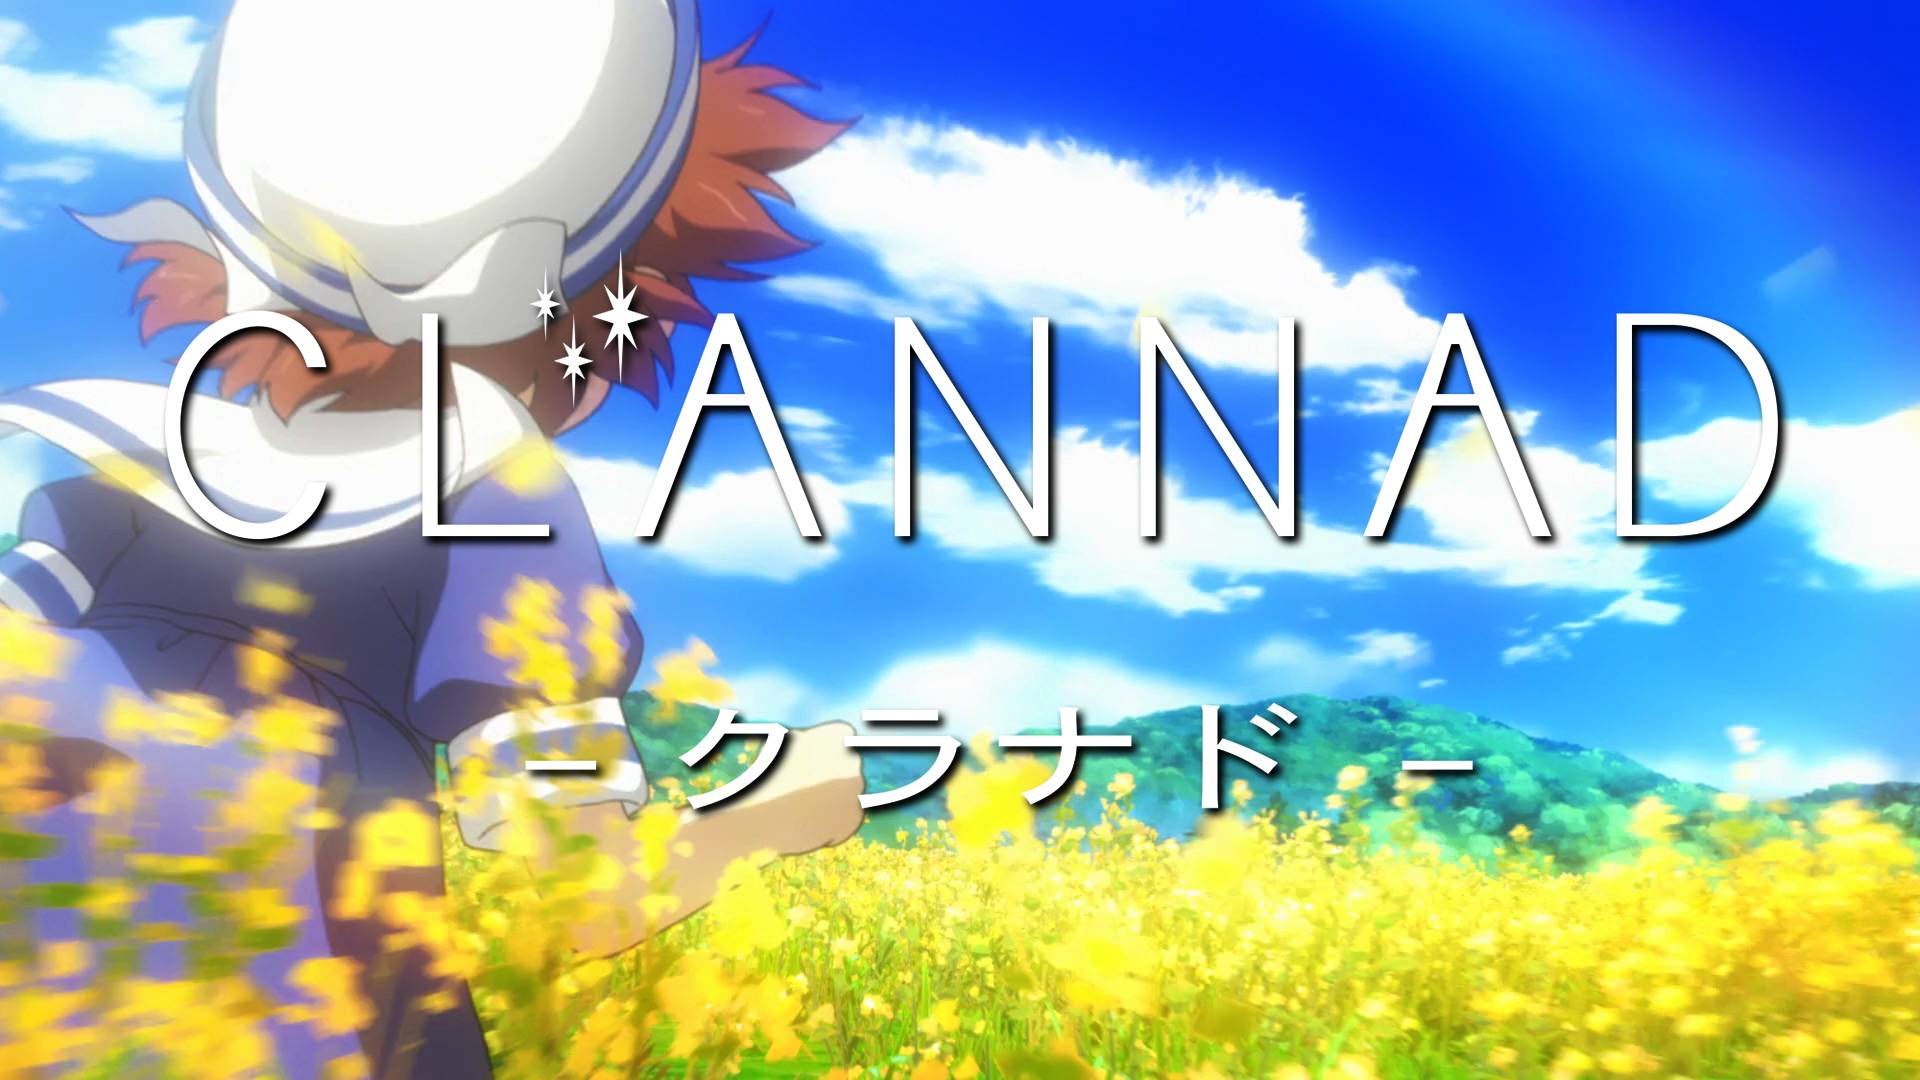 Clannad - recenzja anime - rascal.pl